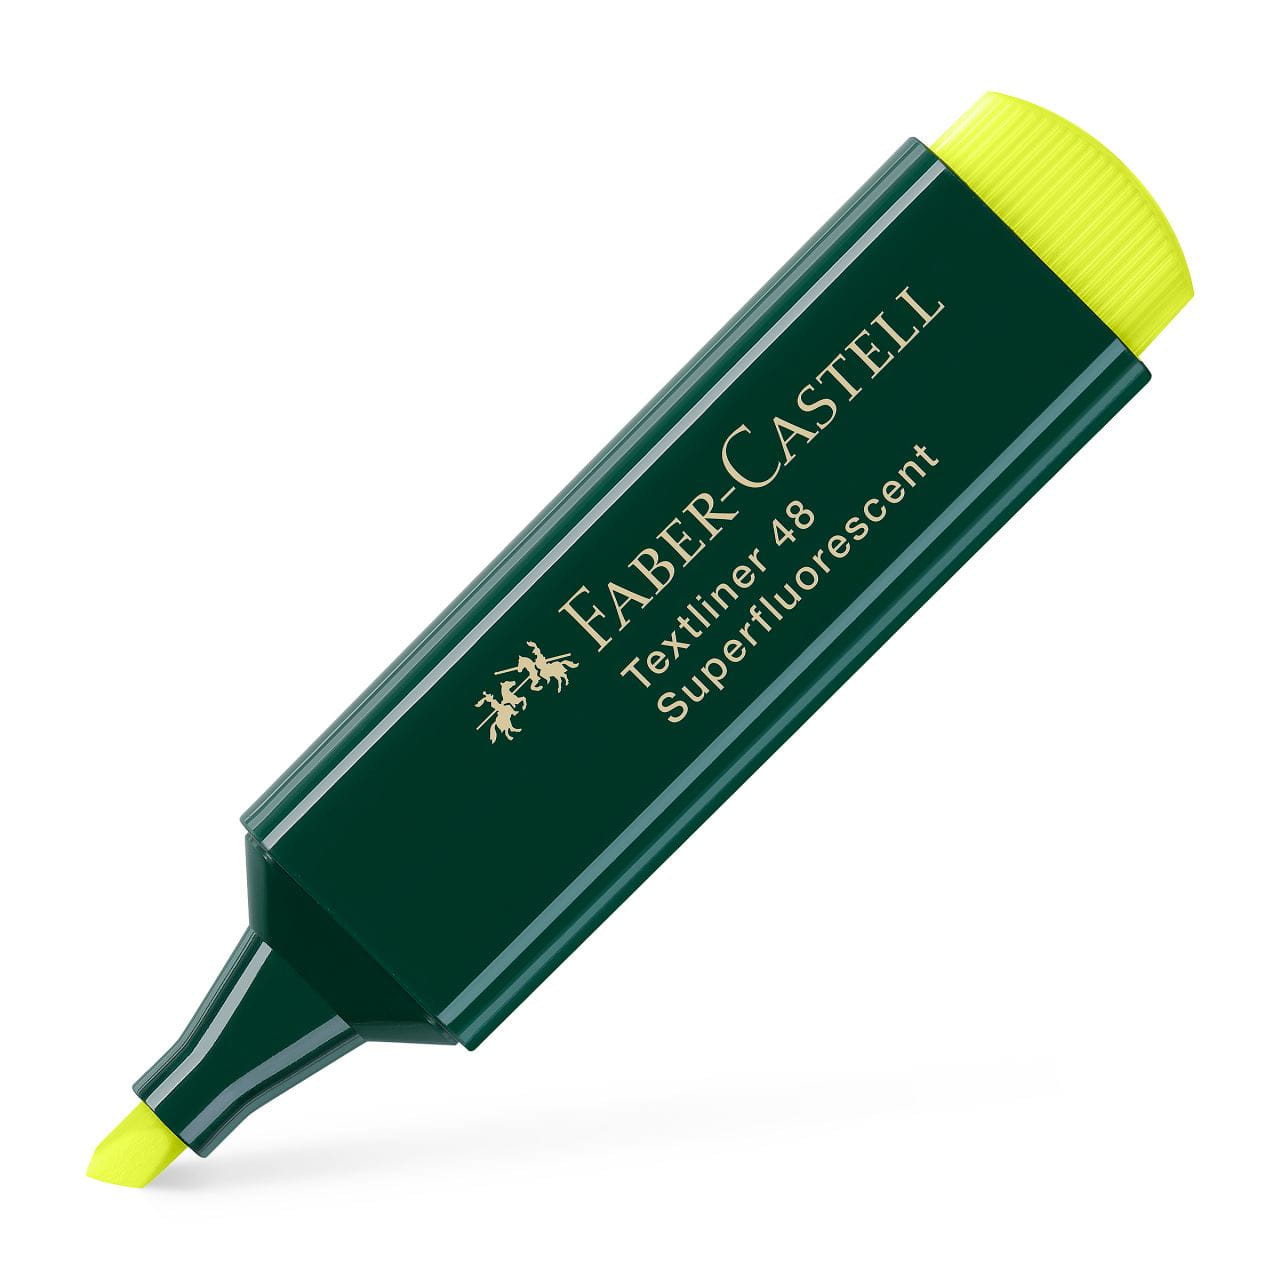 Faber-Castell - Textliner 48 Superfluorescent, yellow